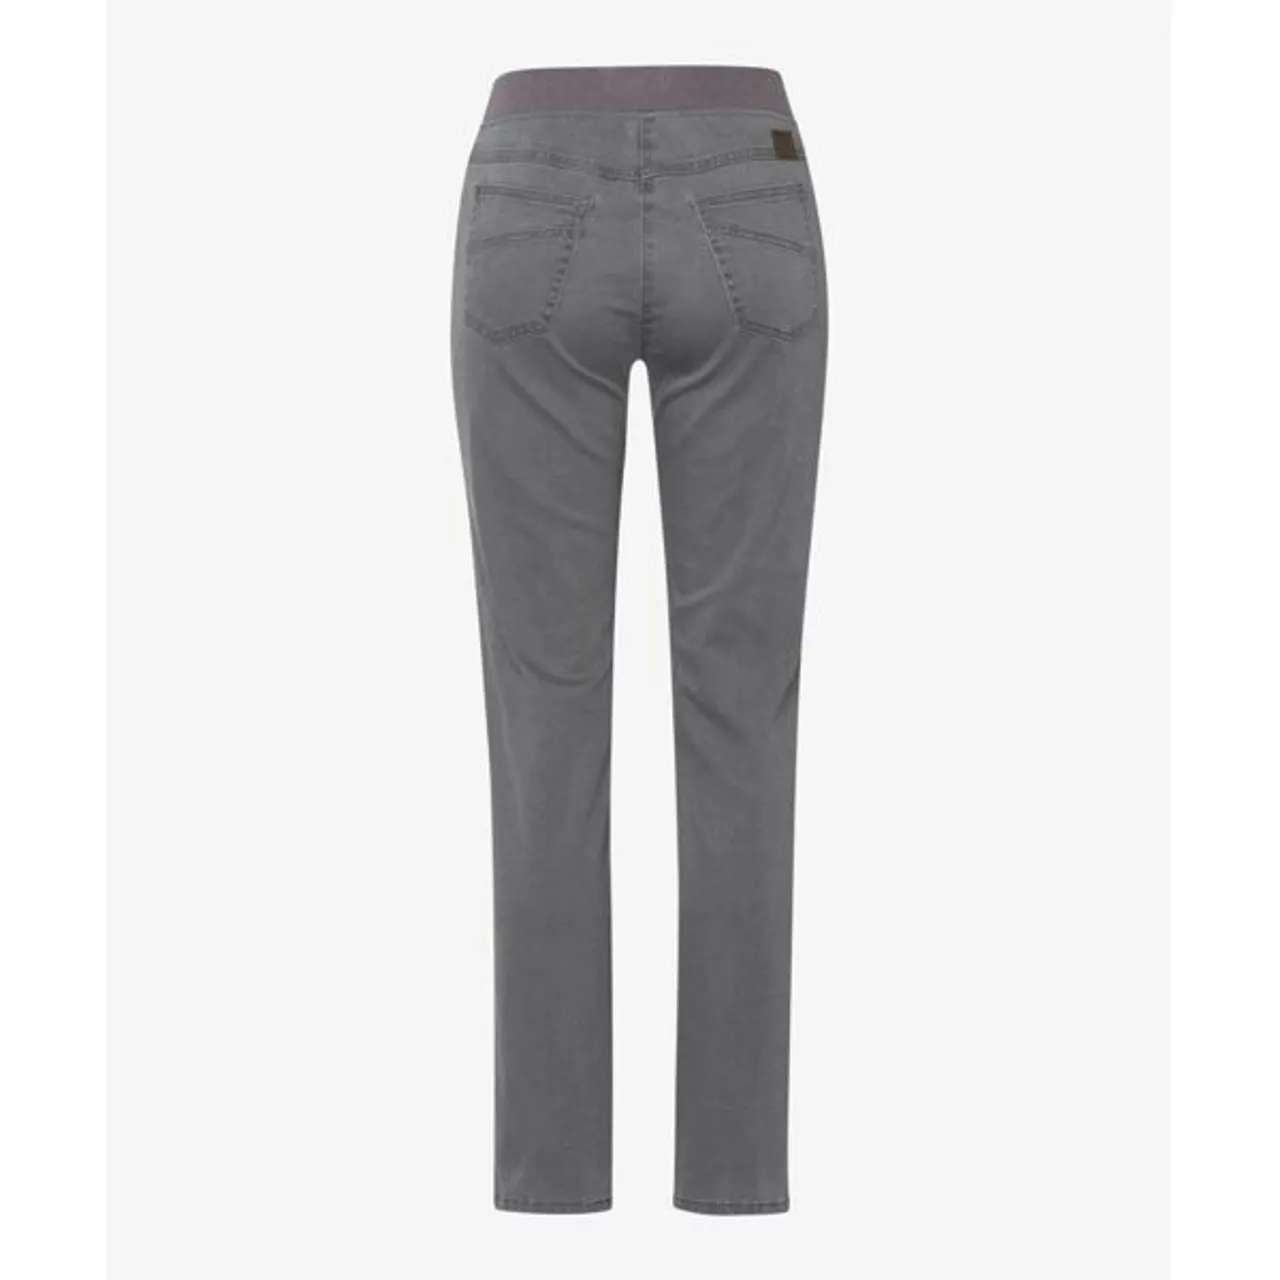 Bequeme Jeans RAPHAELA BY BRAX "Style PAMINA" Gr. 48, Normalgrößen, grau Damen Jeans